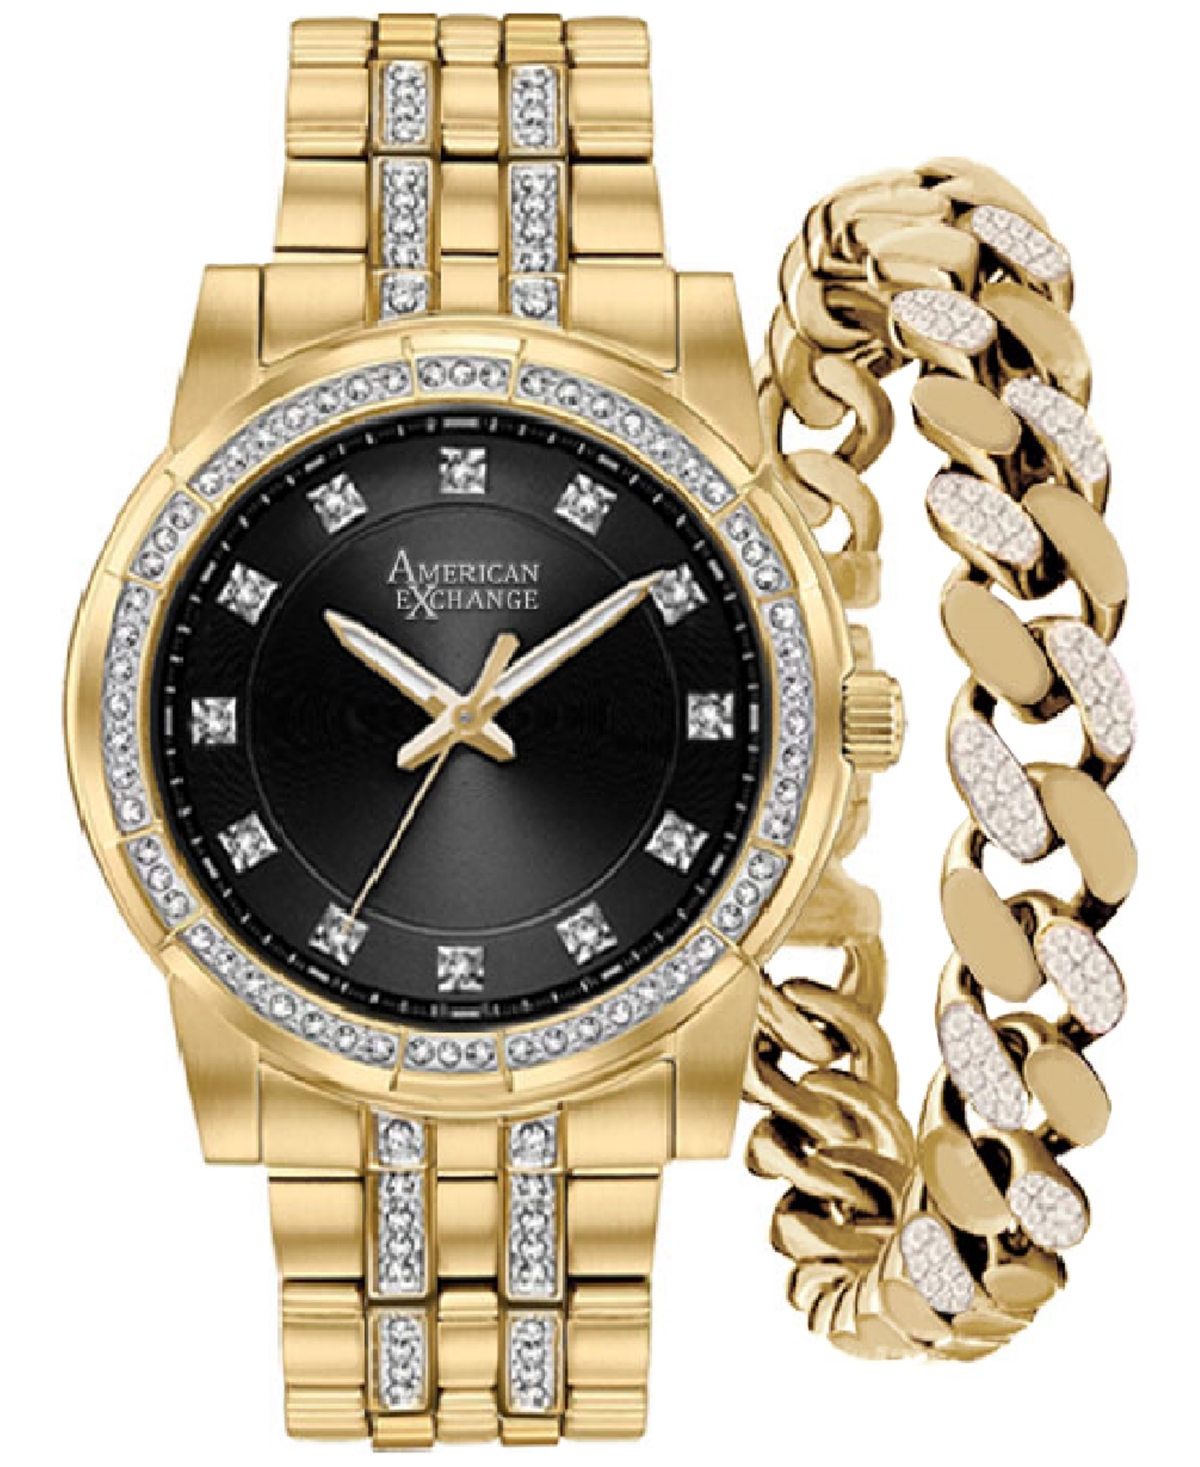 Men's Crystal Bracelet Watch 46mm Gift Set - Gold/Green